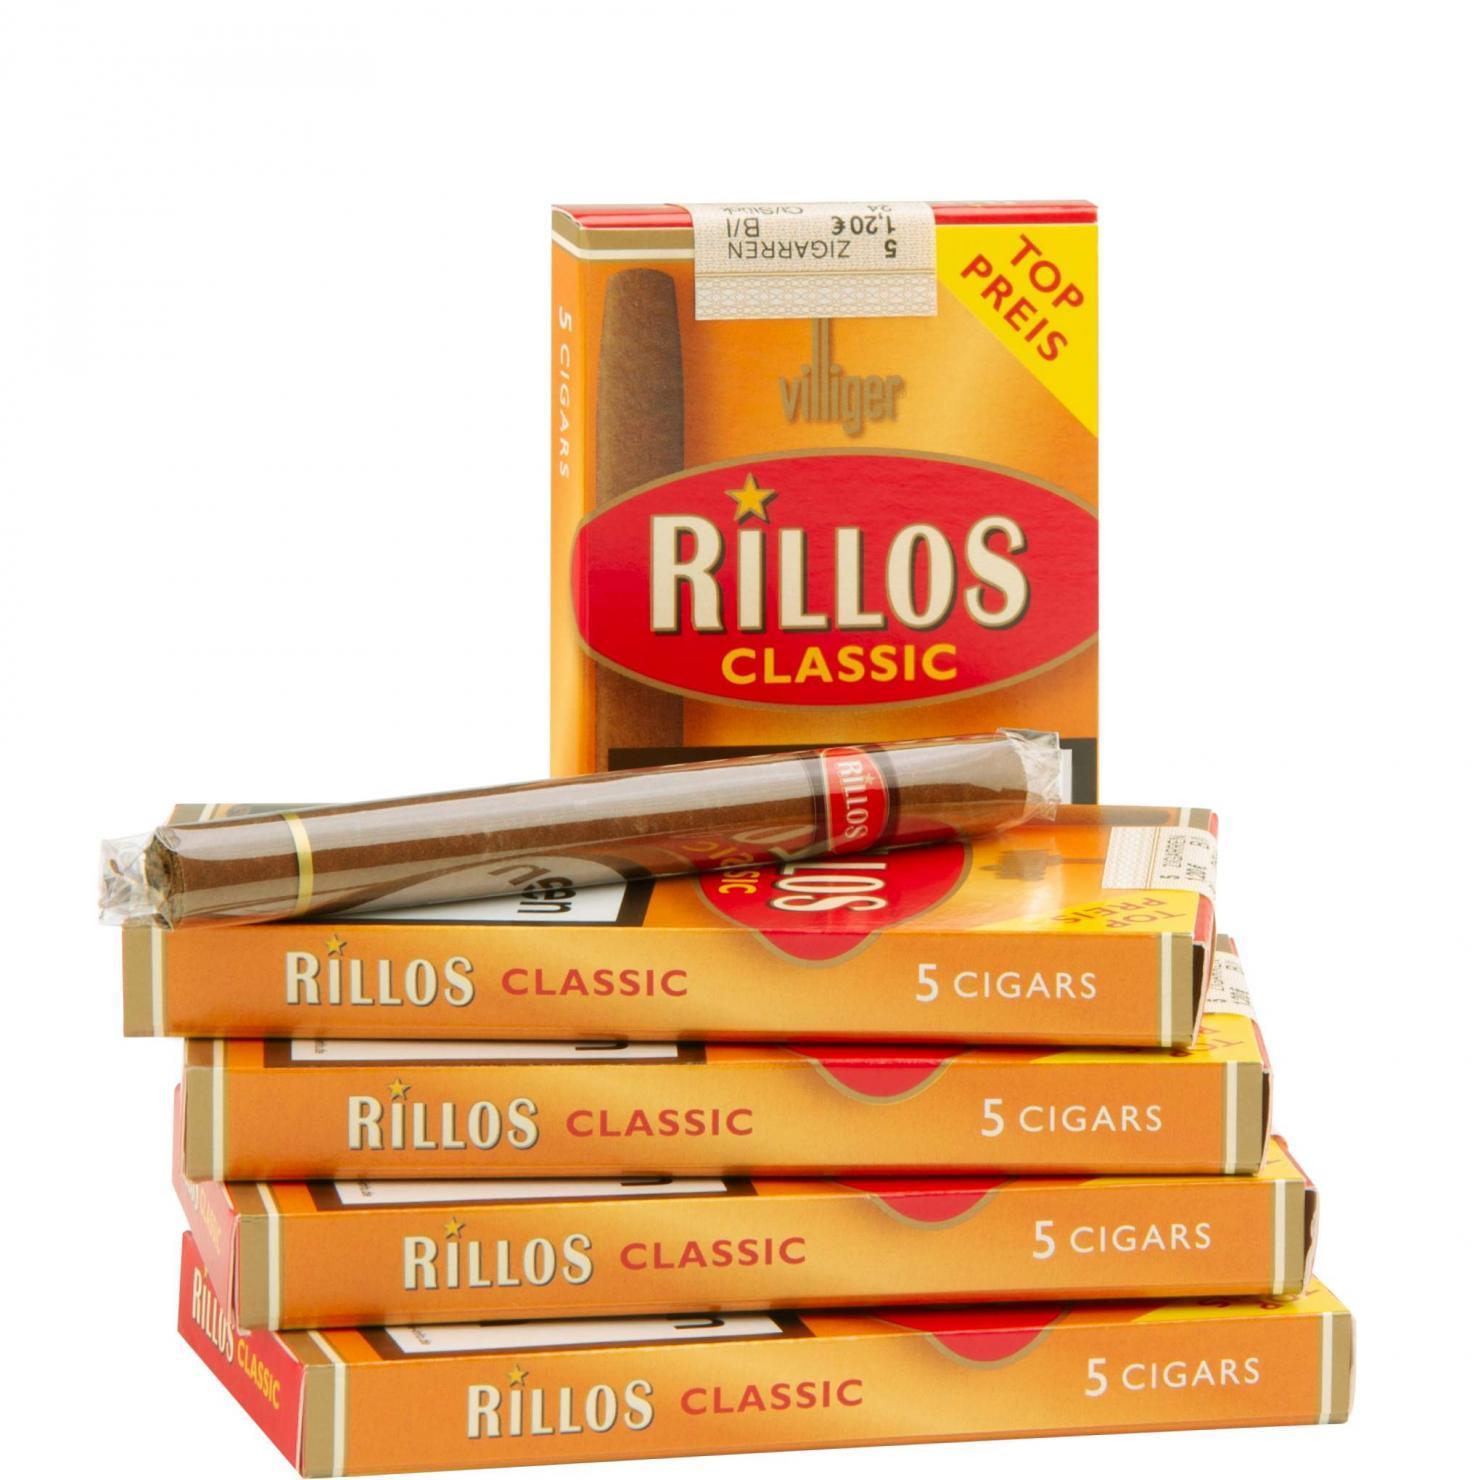 Villiger Rillos Classic 20 x 5 Zigarillos